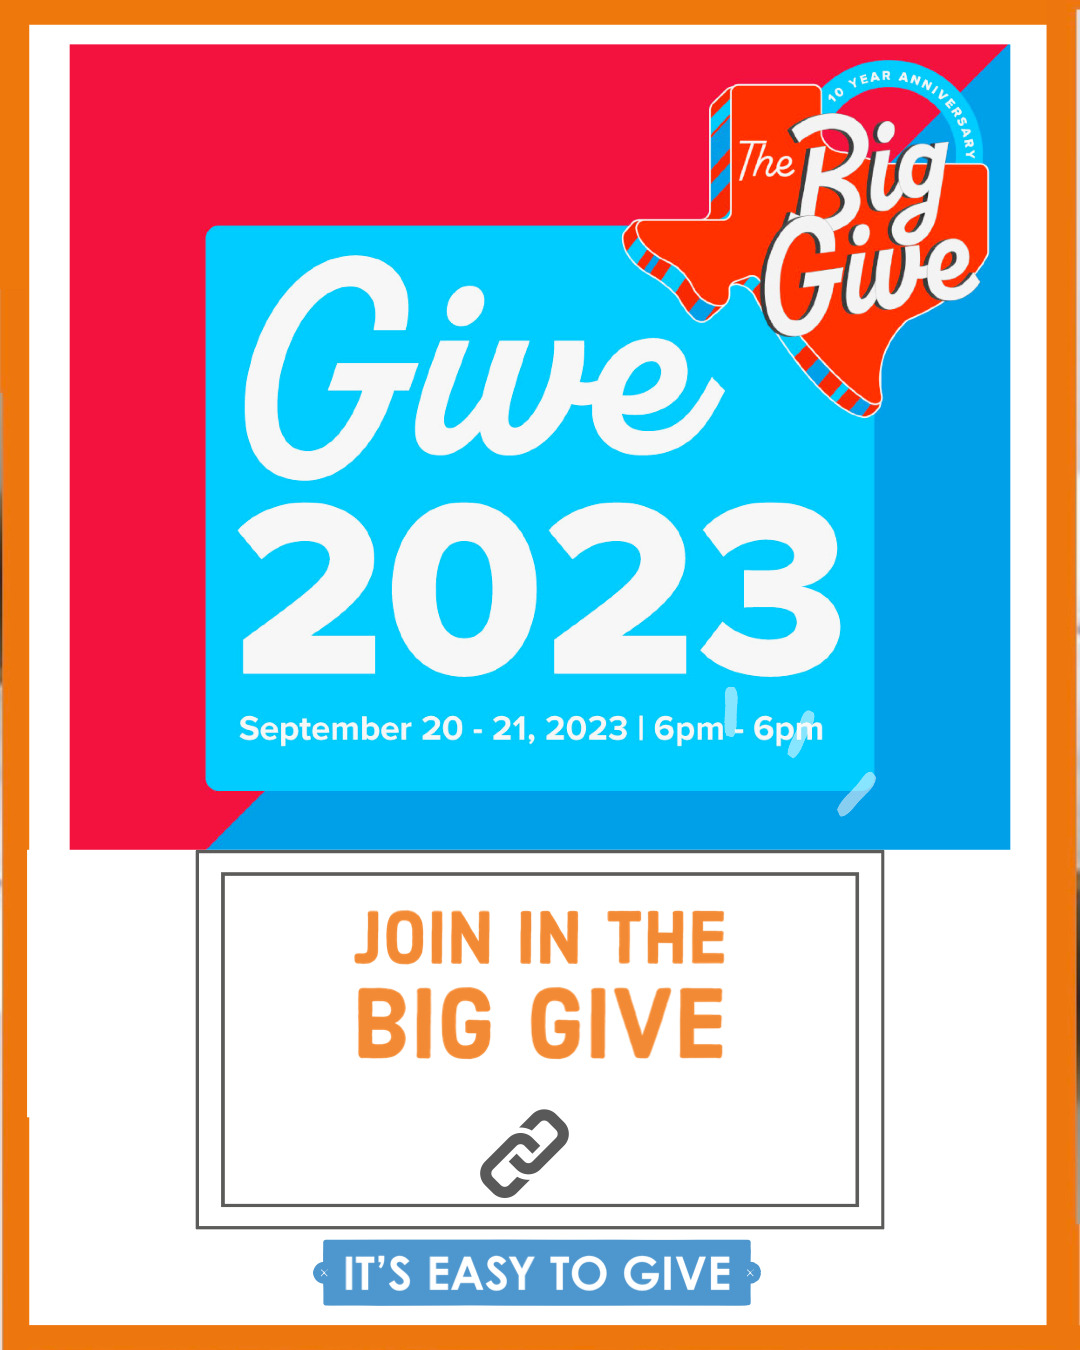 Big Give 2023 San Antonio